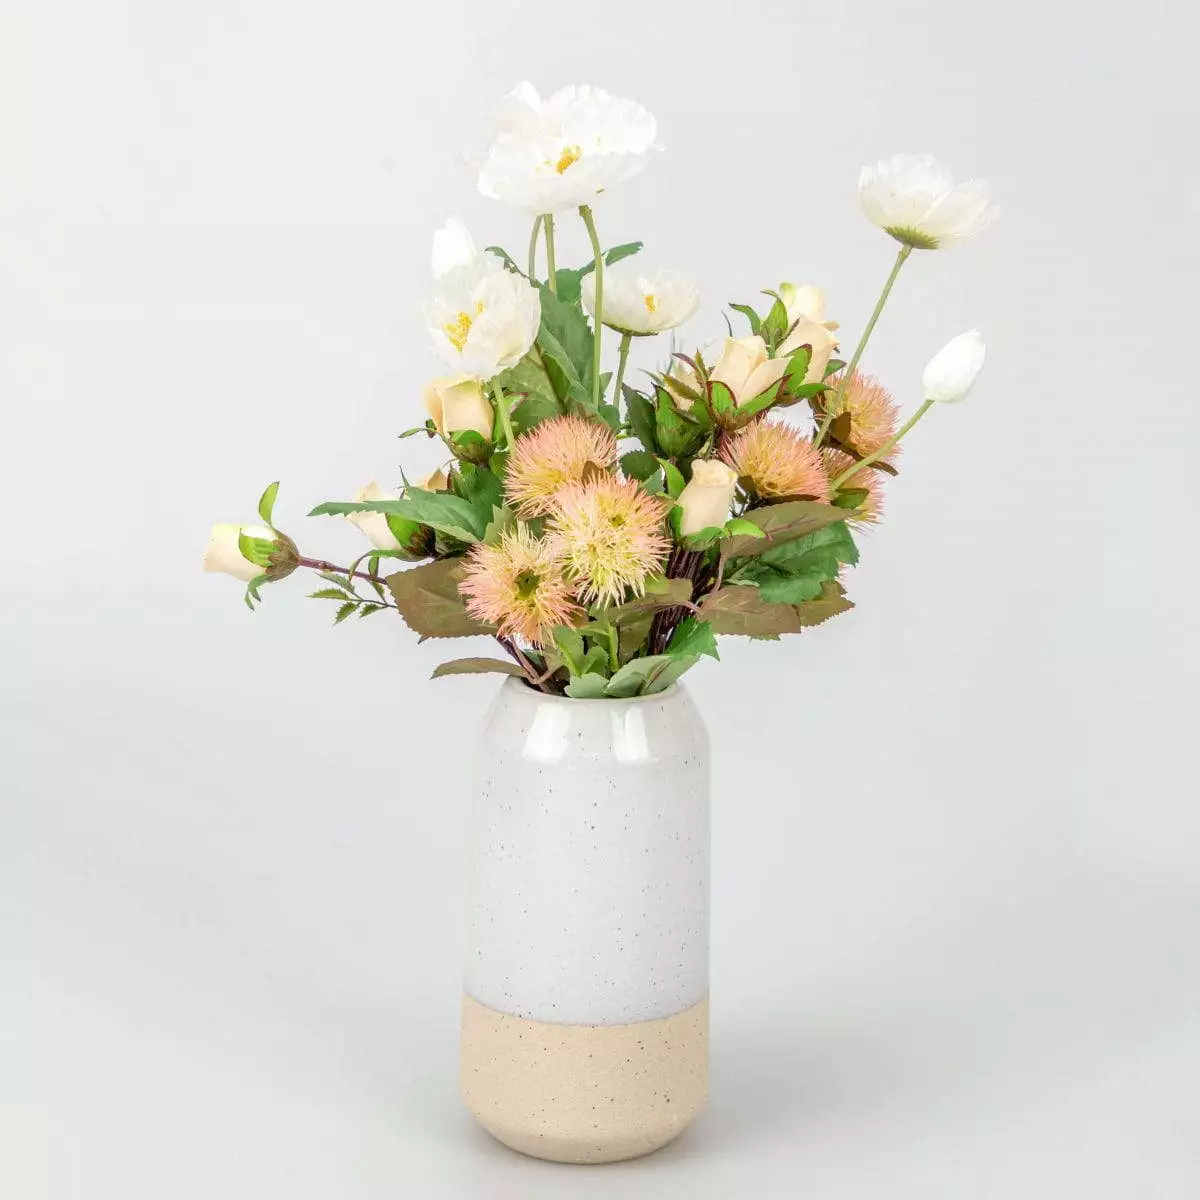 Flower Arrangement With Vase For Home Decorations